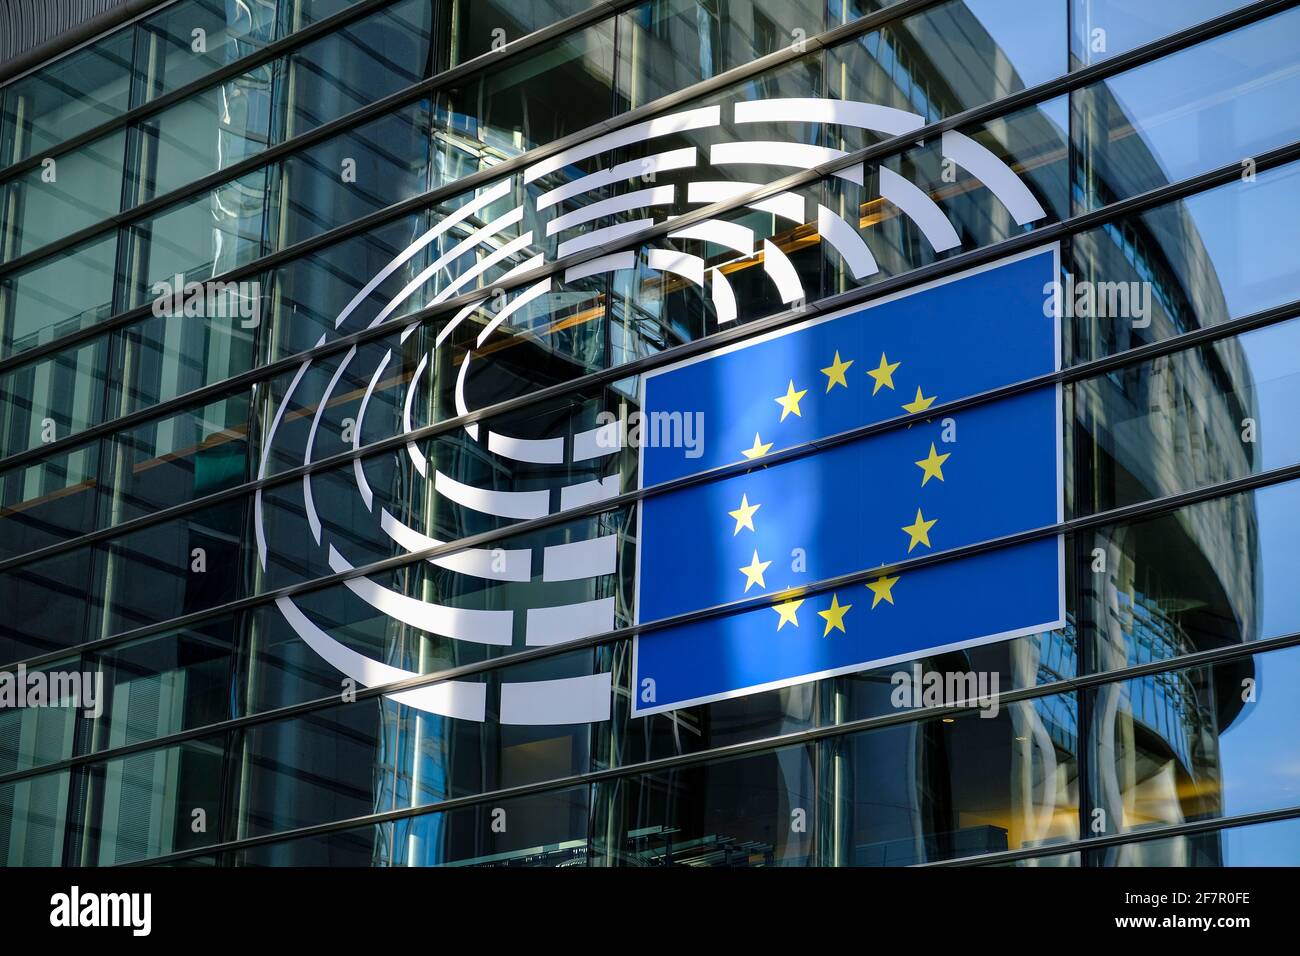 20.09.2019, Bruessel, Belgien - Logo des Europaeischen Parlaments en Bruessel am Gebaeude Altiero Spinelli Foto de stock